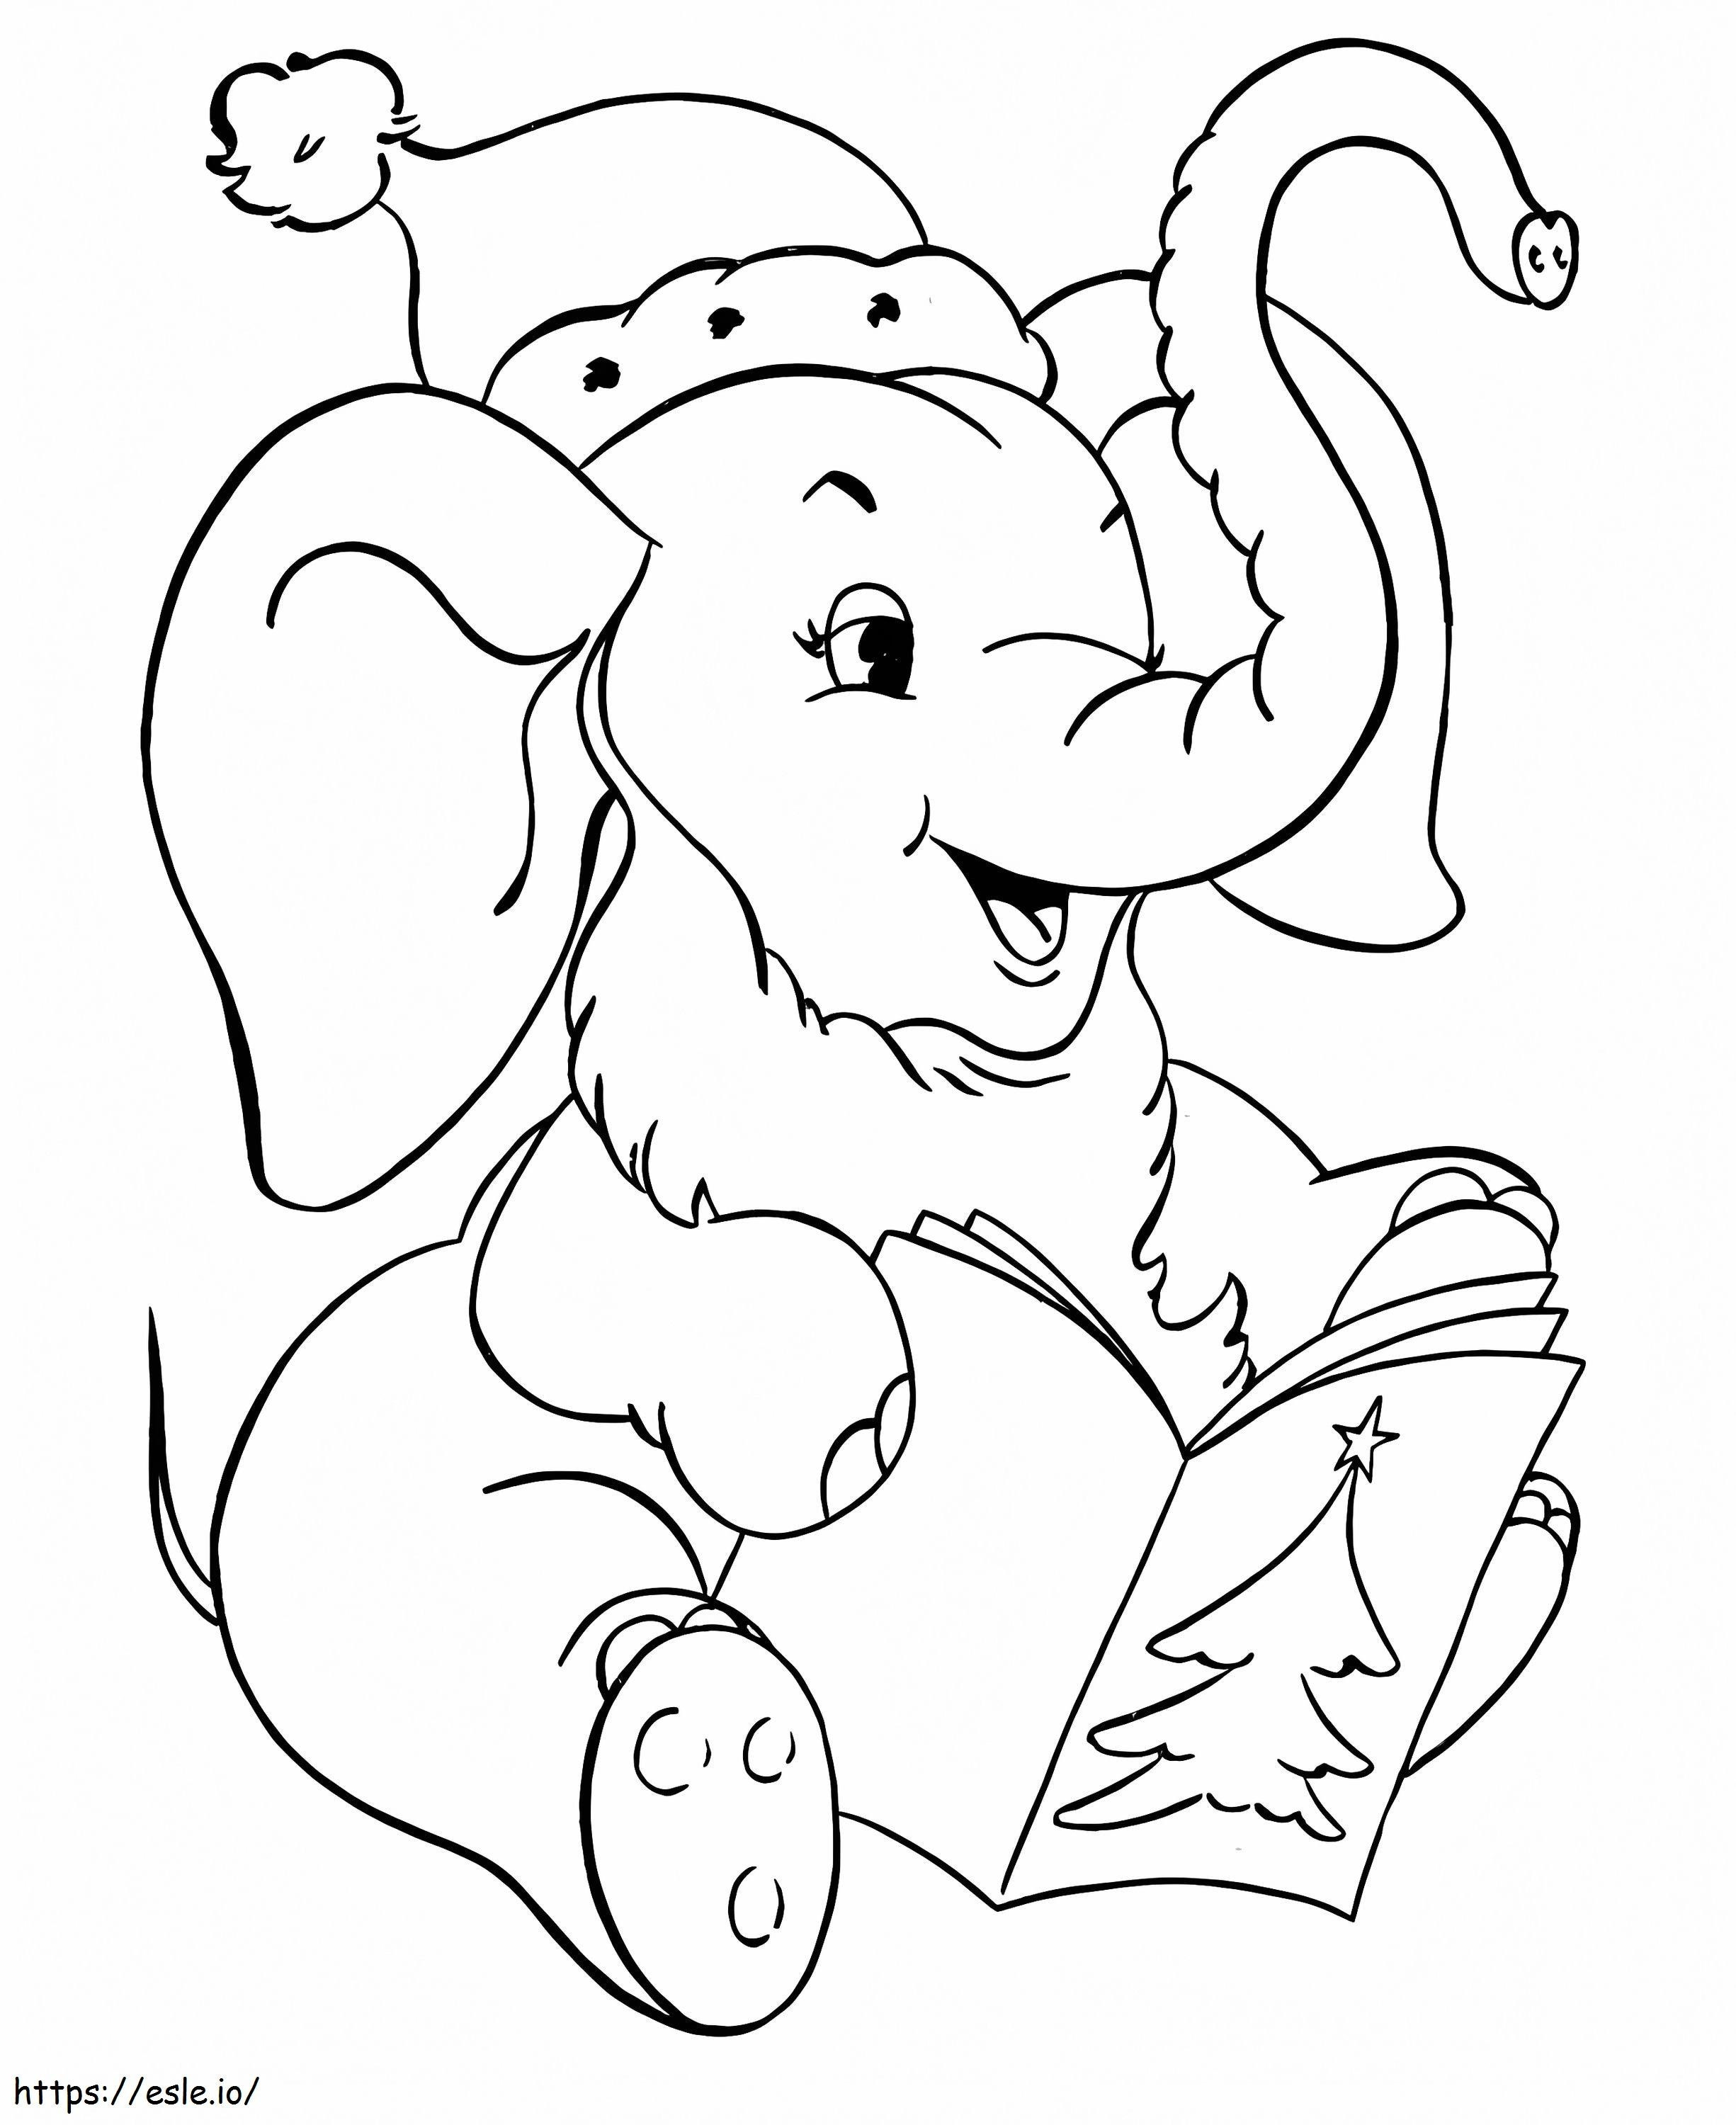 Elefante navideño cantando para colorear